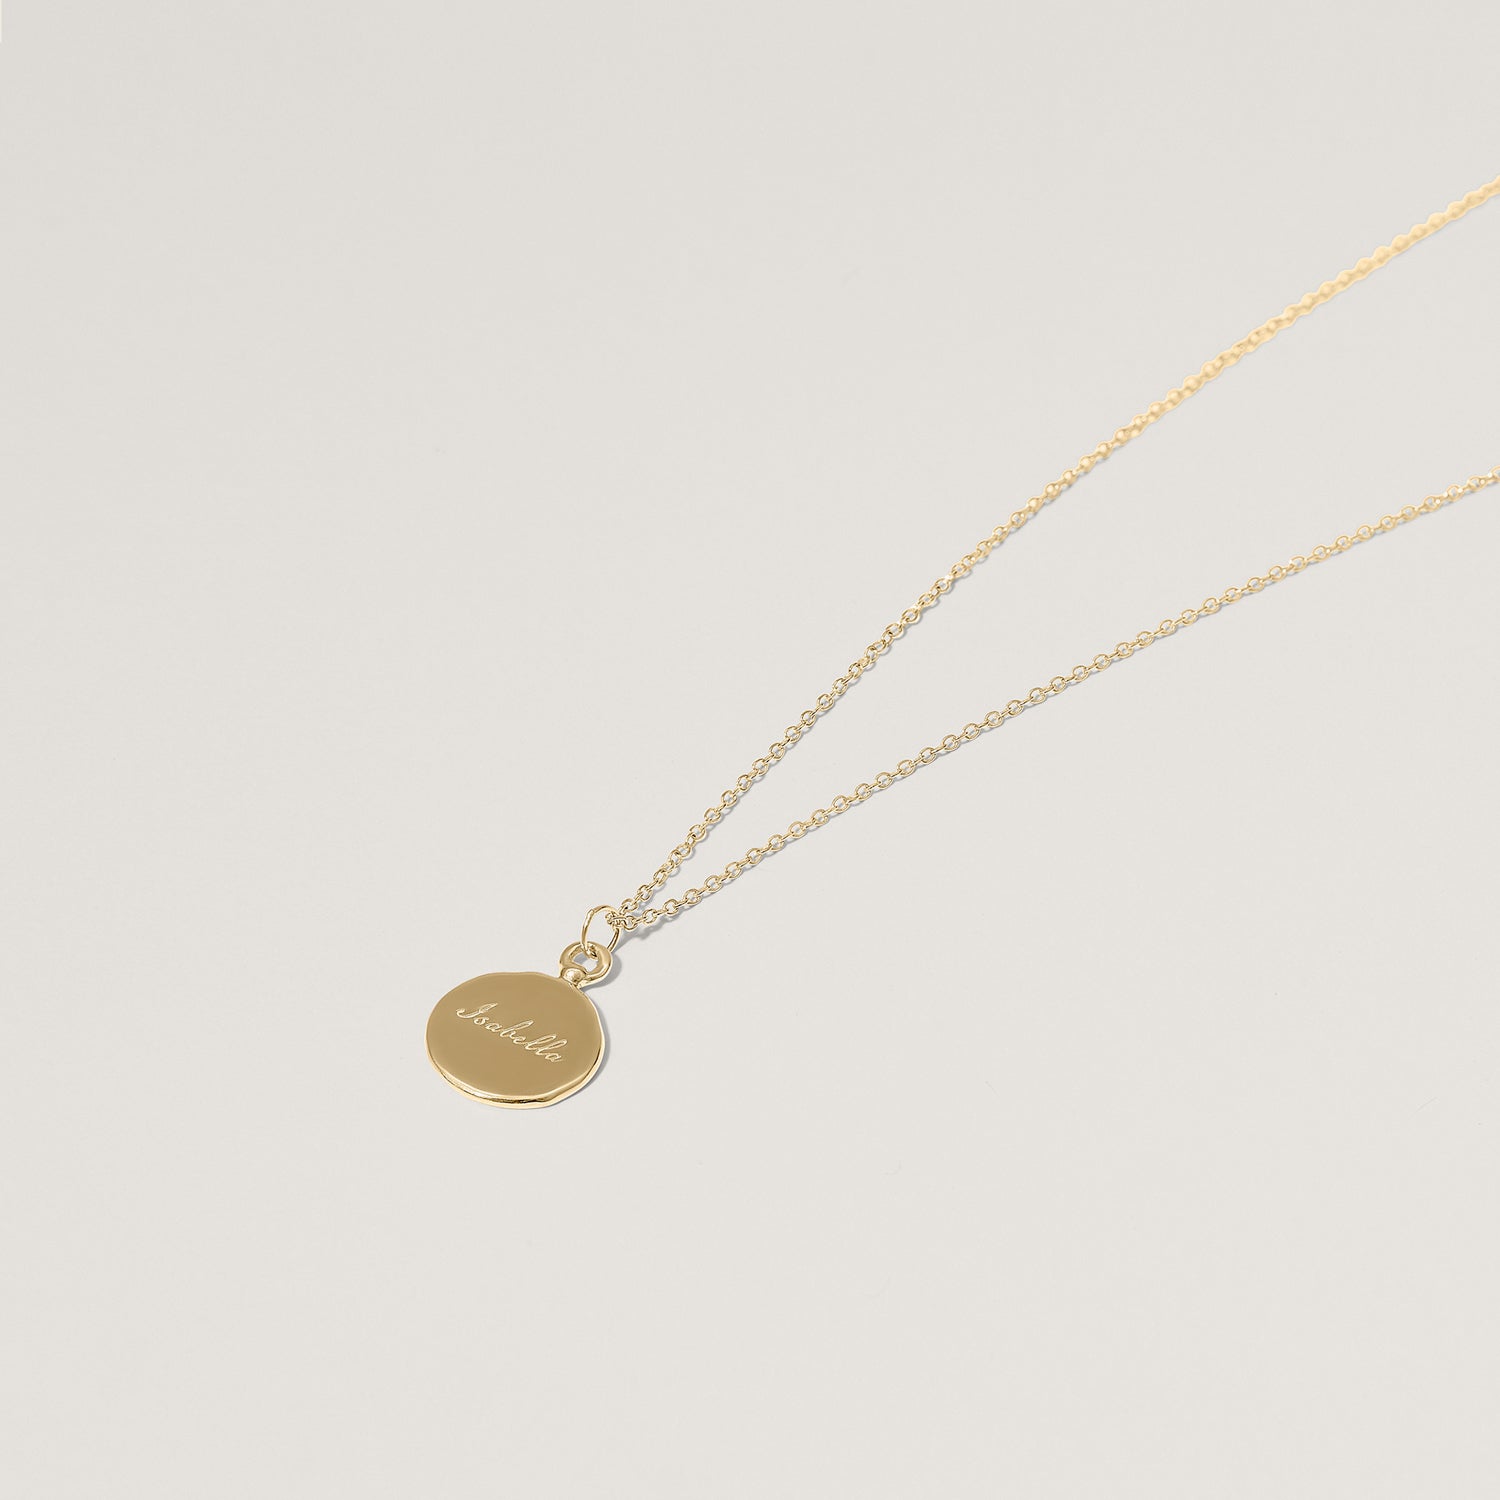 Fluid Medallion Anchor Chain 14k Solid Gold - High Shine